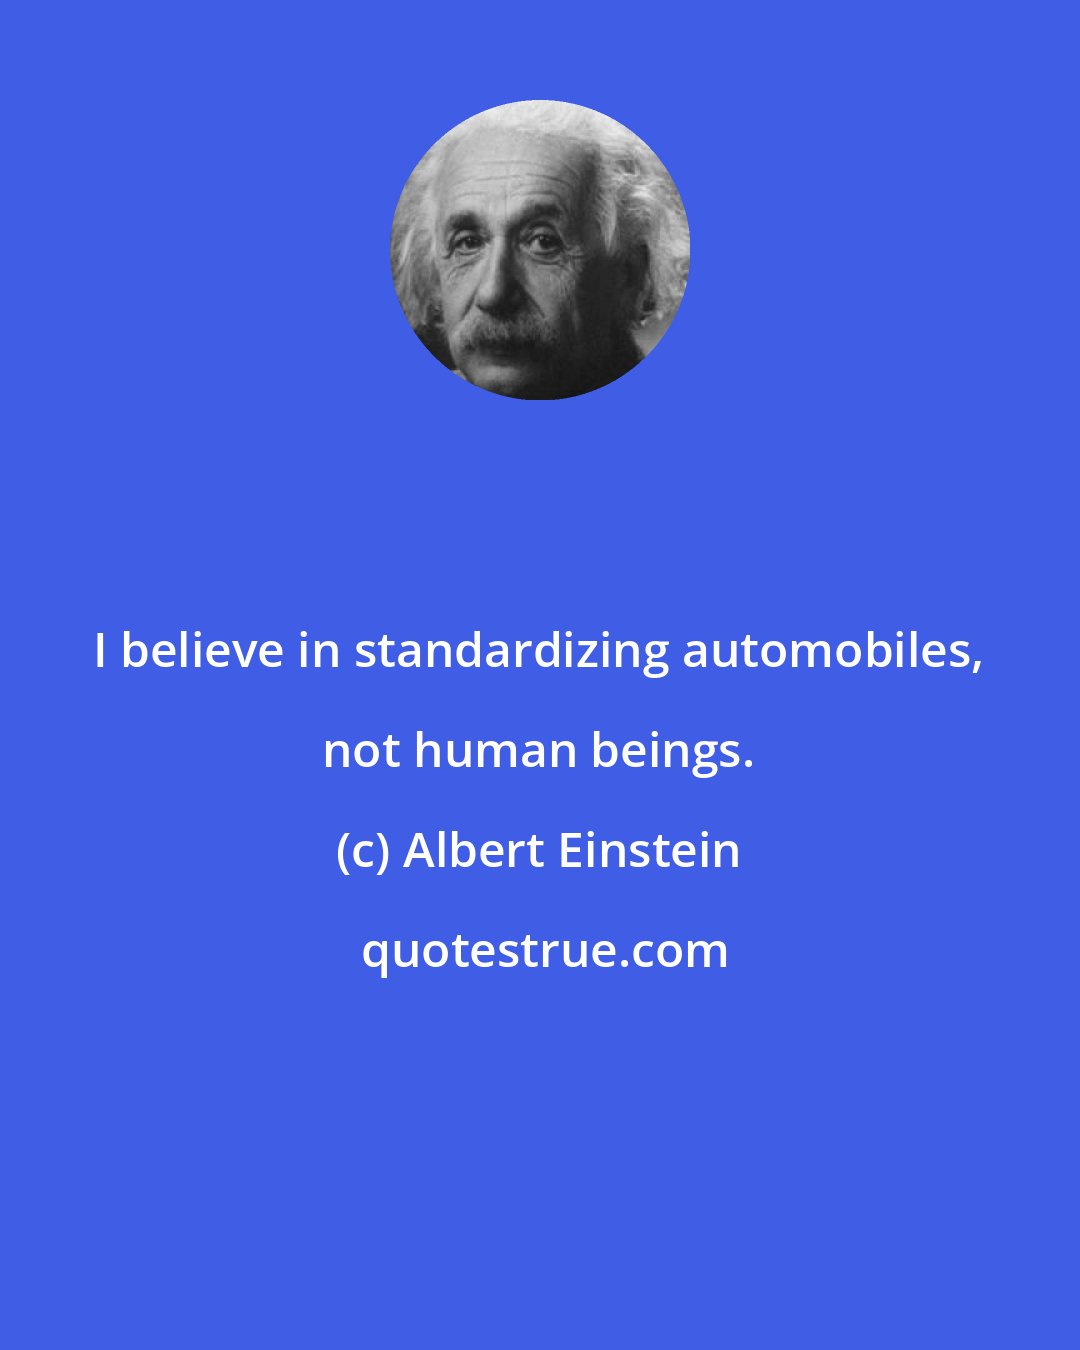 Albert Einstein: I believe in standardizing automobiles, not human beings.